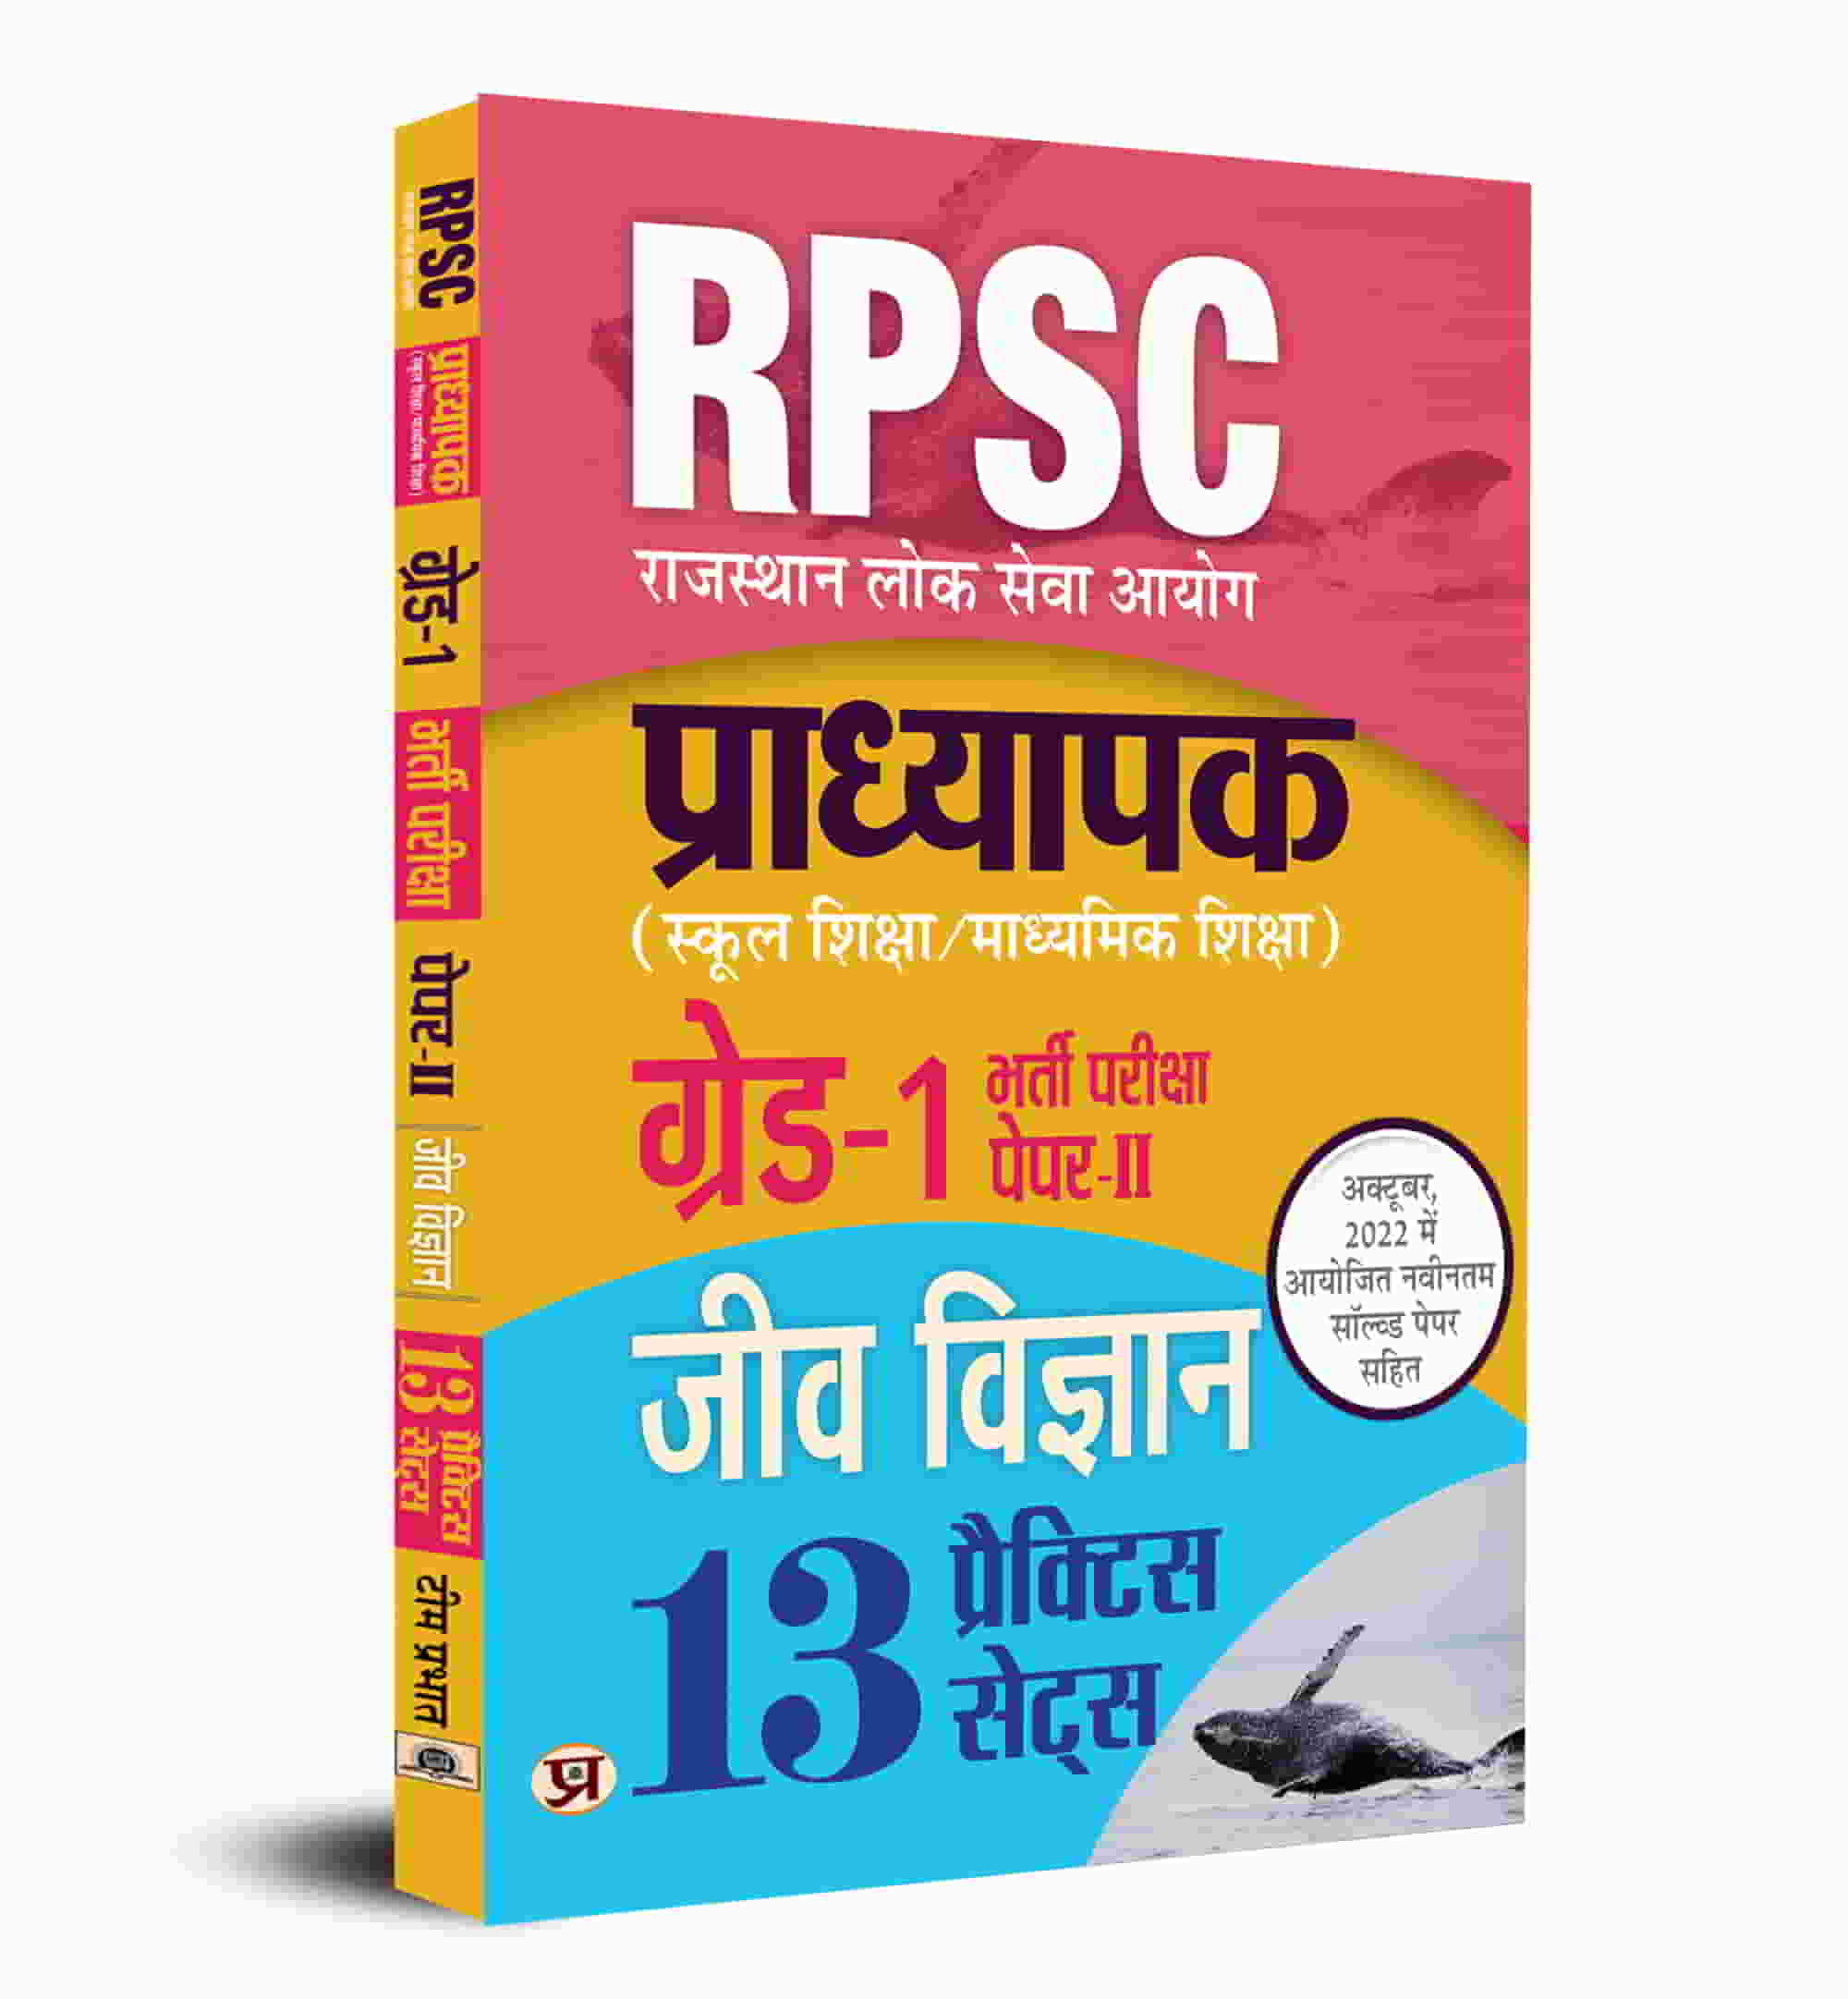 RPSC Biology Professor School Education / Secondary Education Recruitment Exam (PAPER-II ) Subject Biology Grade - 1 13 Practice Sets Book In Hindi 